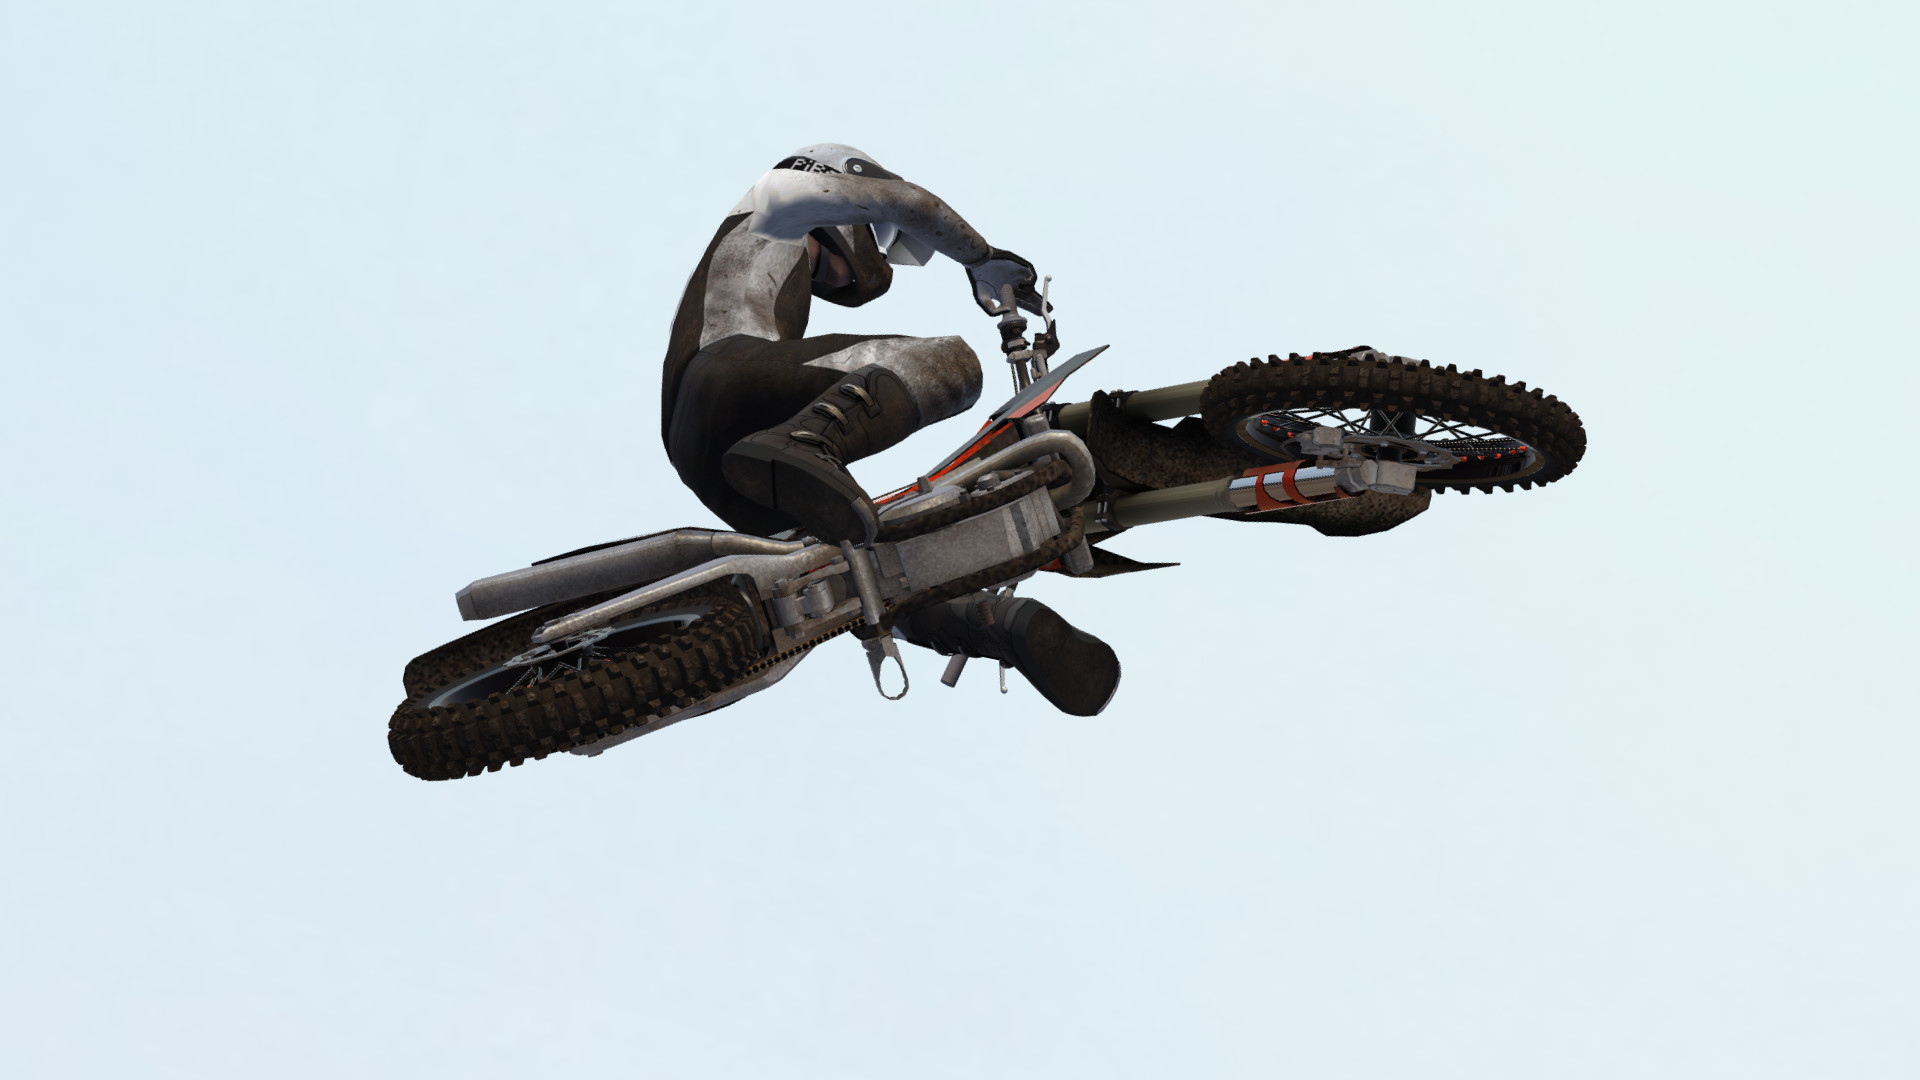 Download Mx stunt bike grau simulator APK